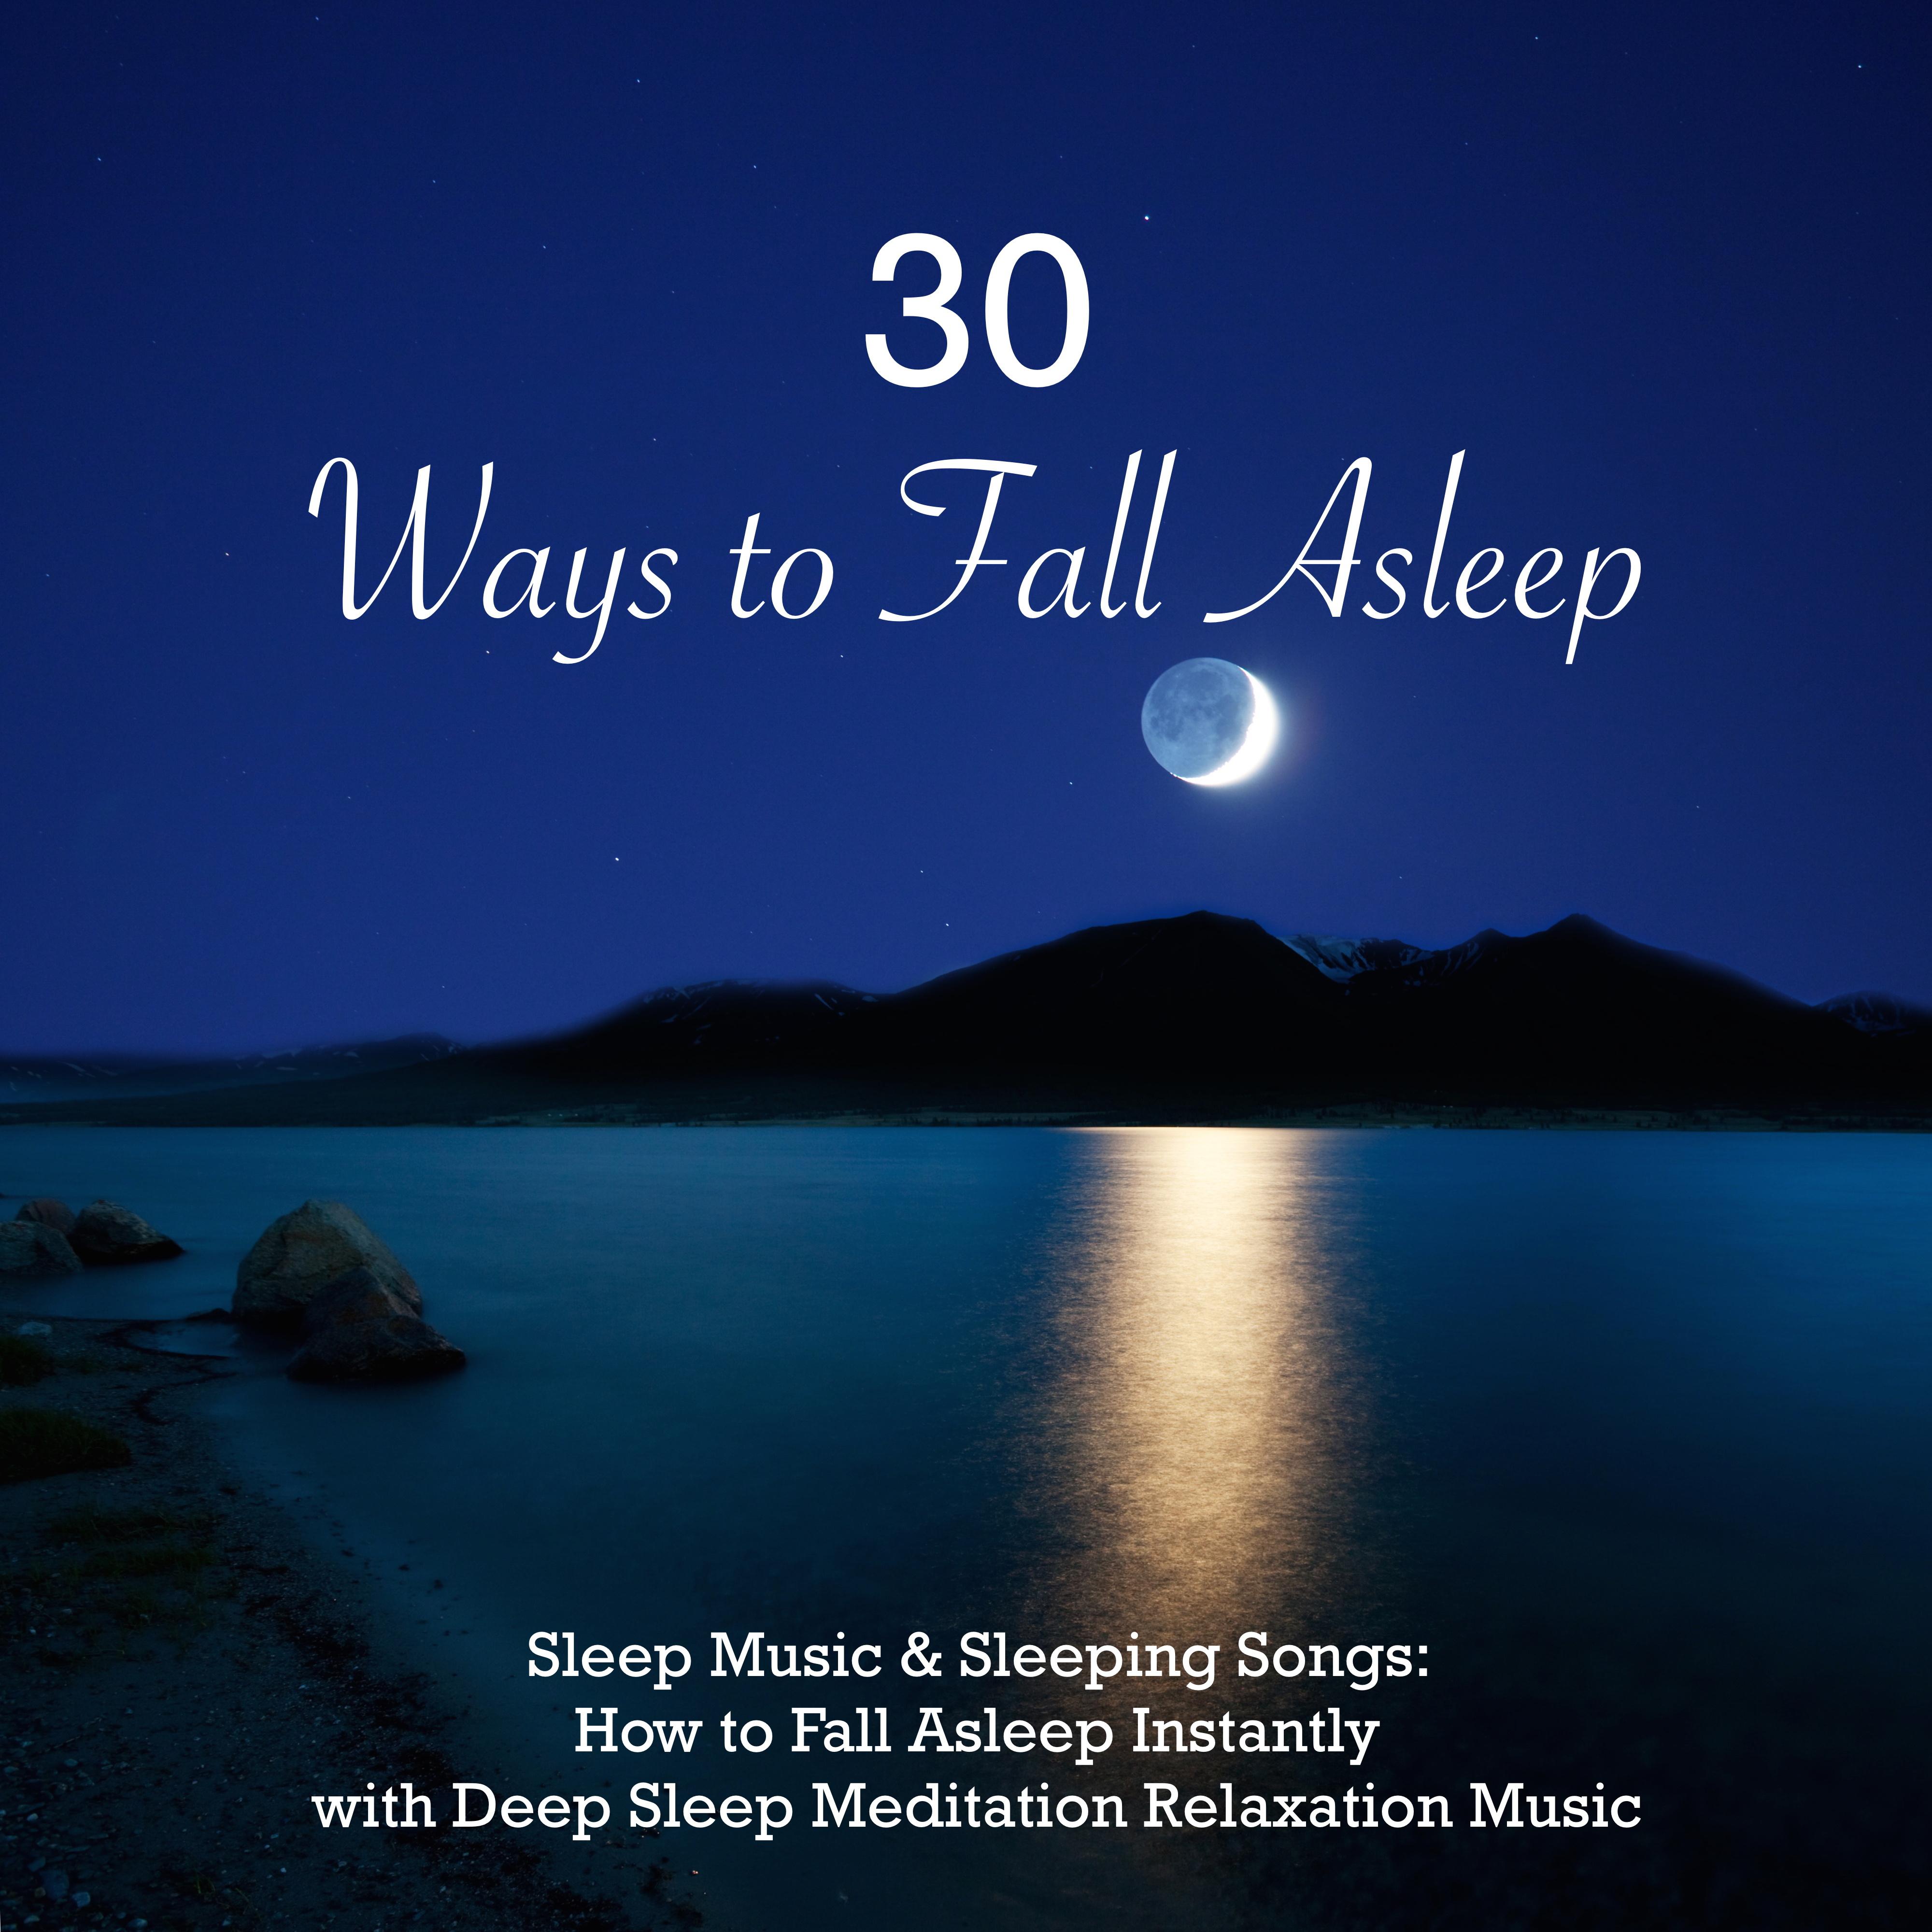 Sleep Music to Fall Asleep Fast